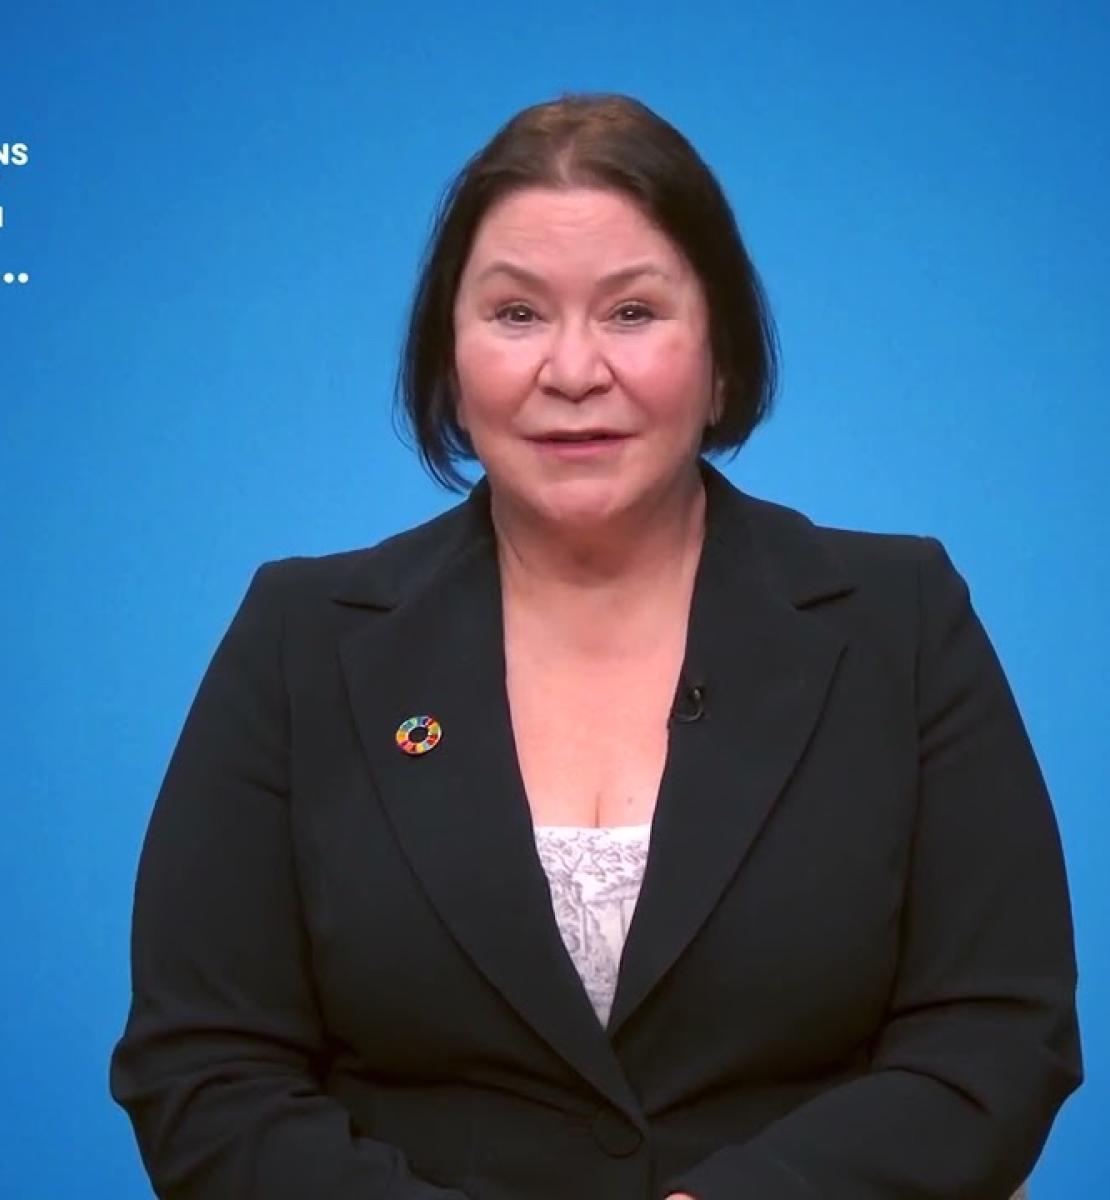 Screenshot from video message shows Resident Coordinator, Karla Robin Hershey